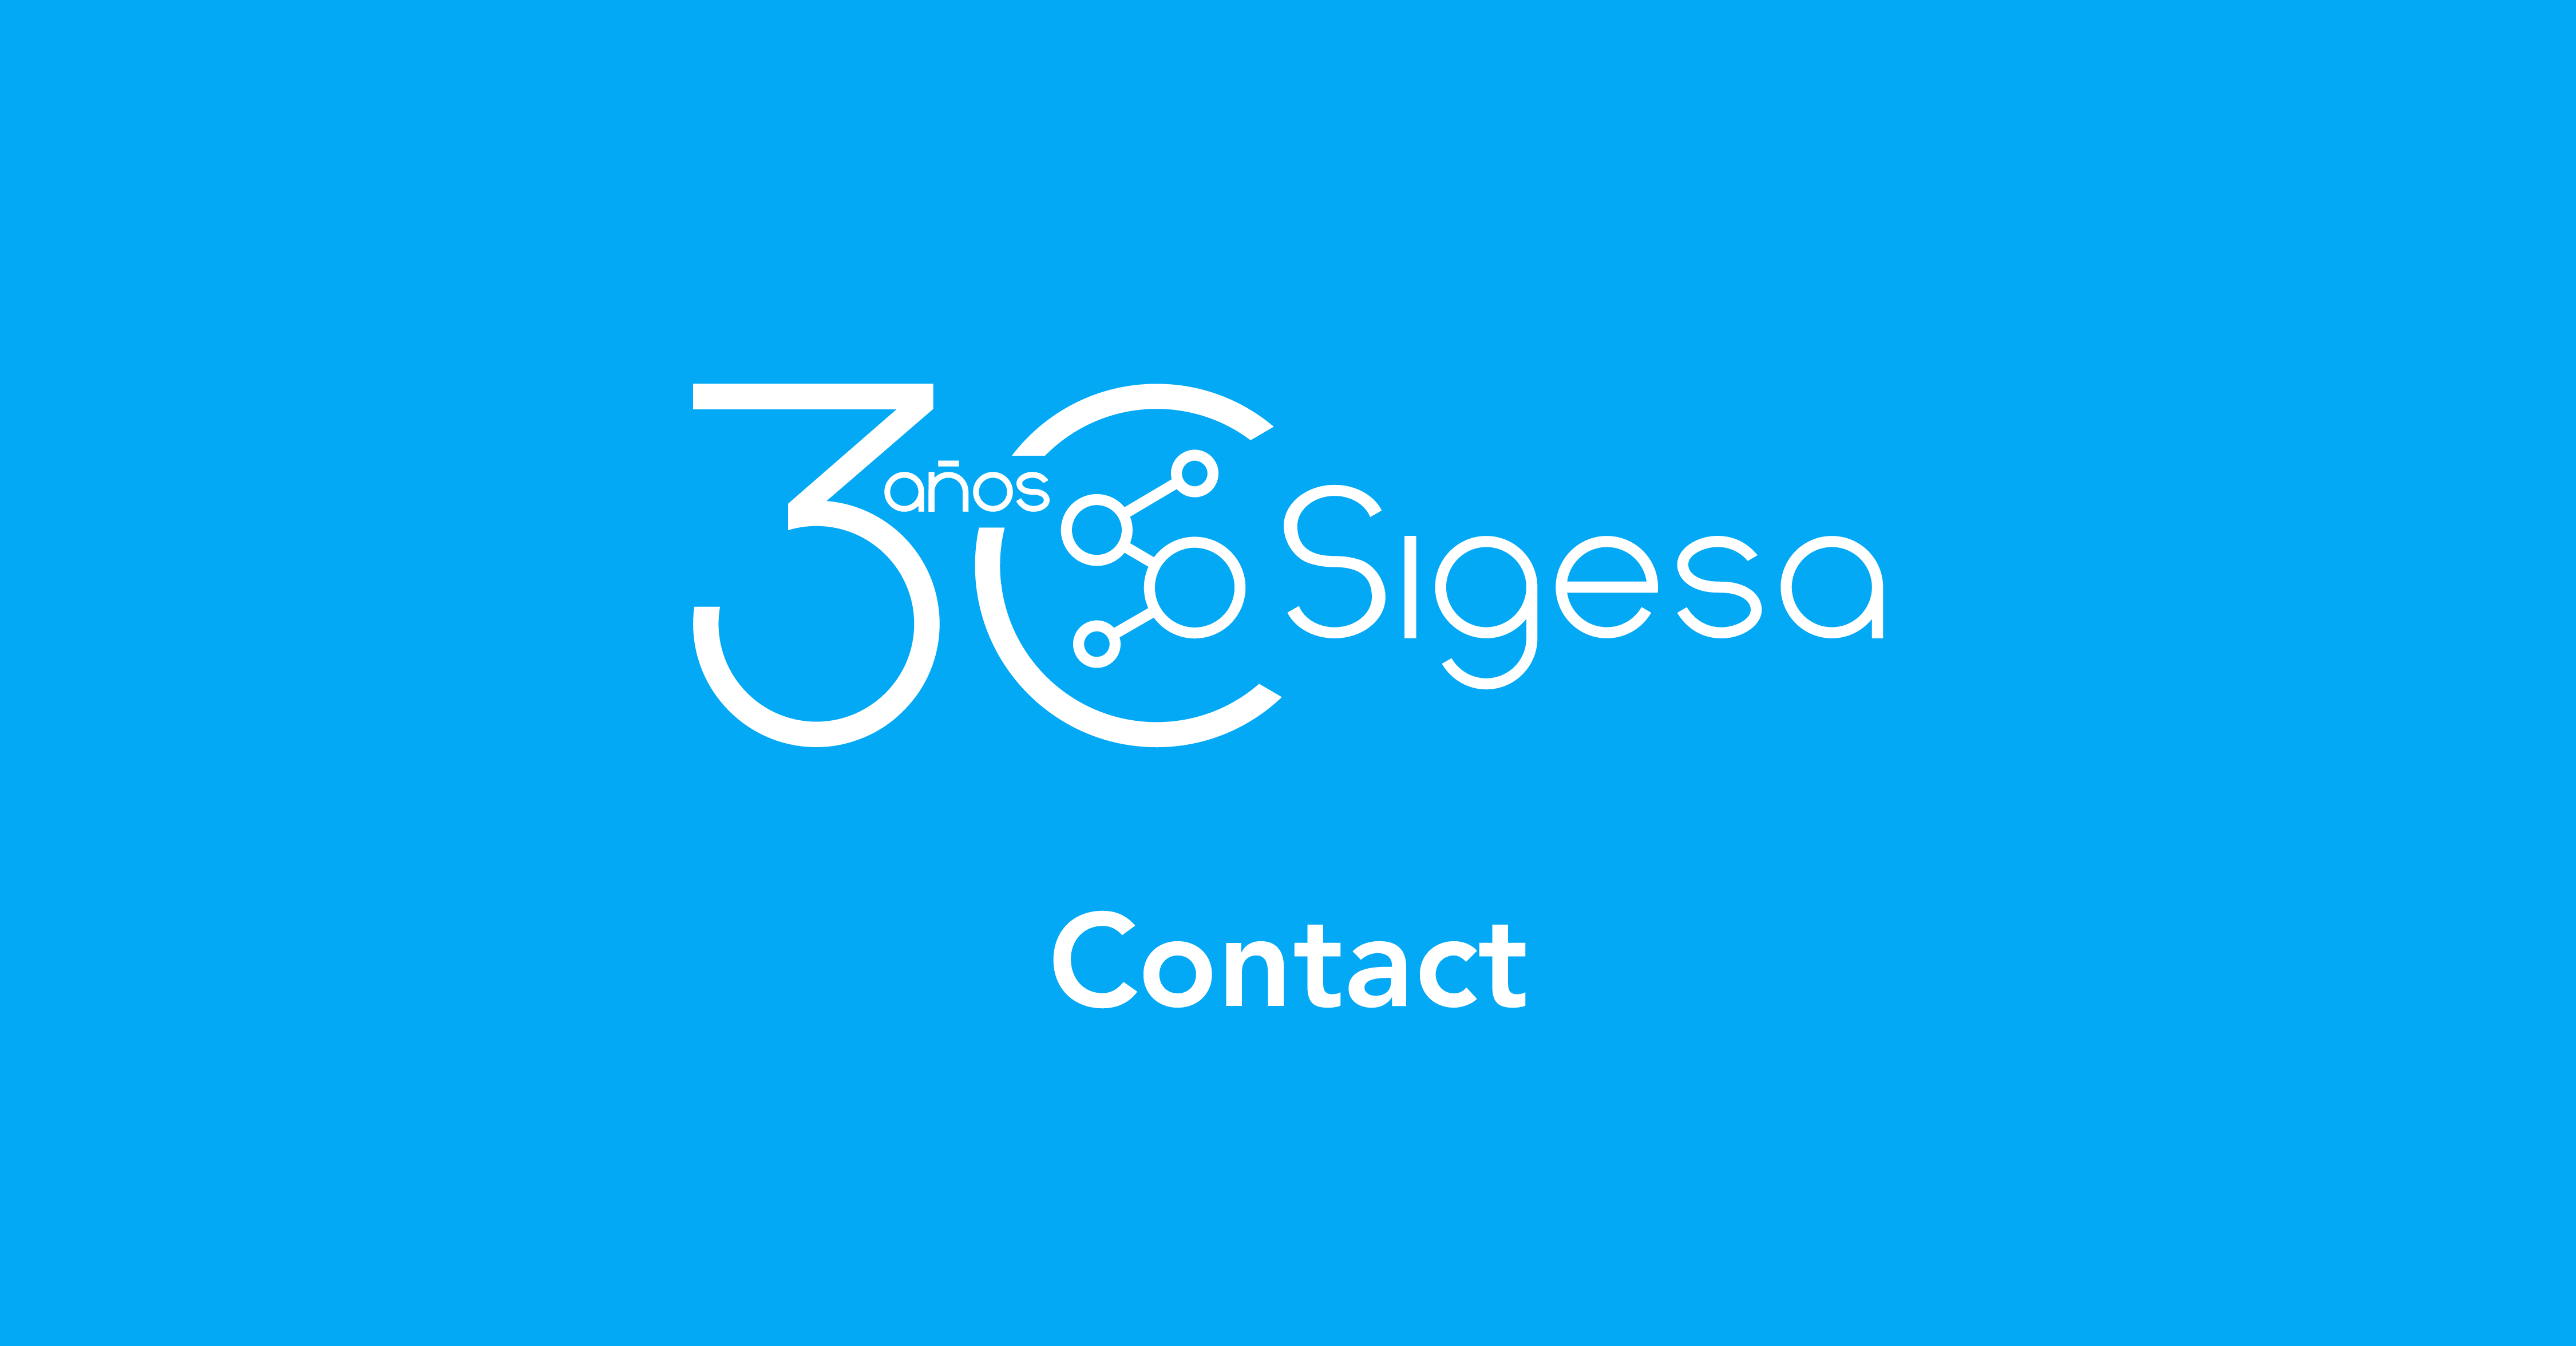 Sigesa Contact